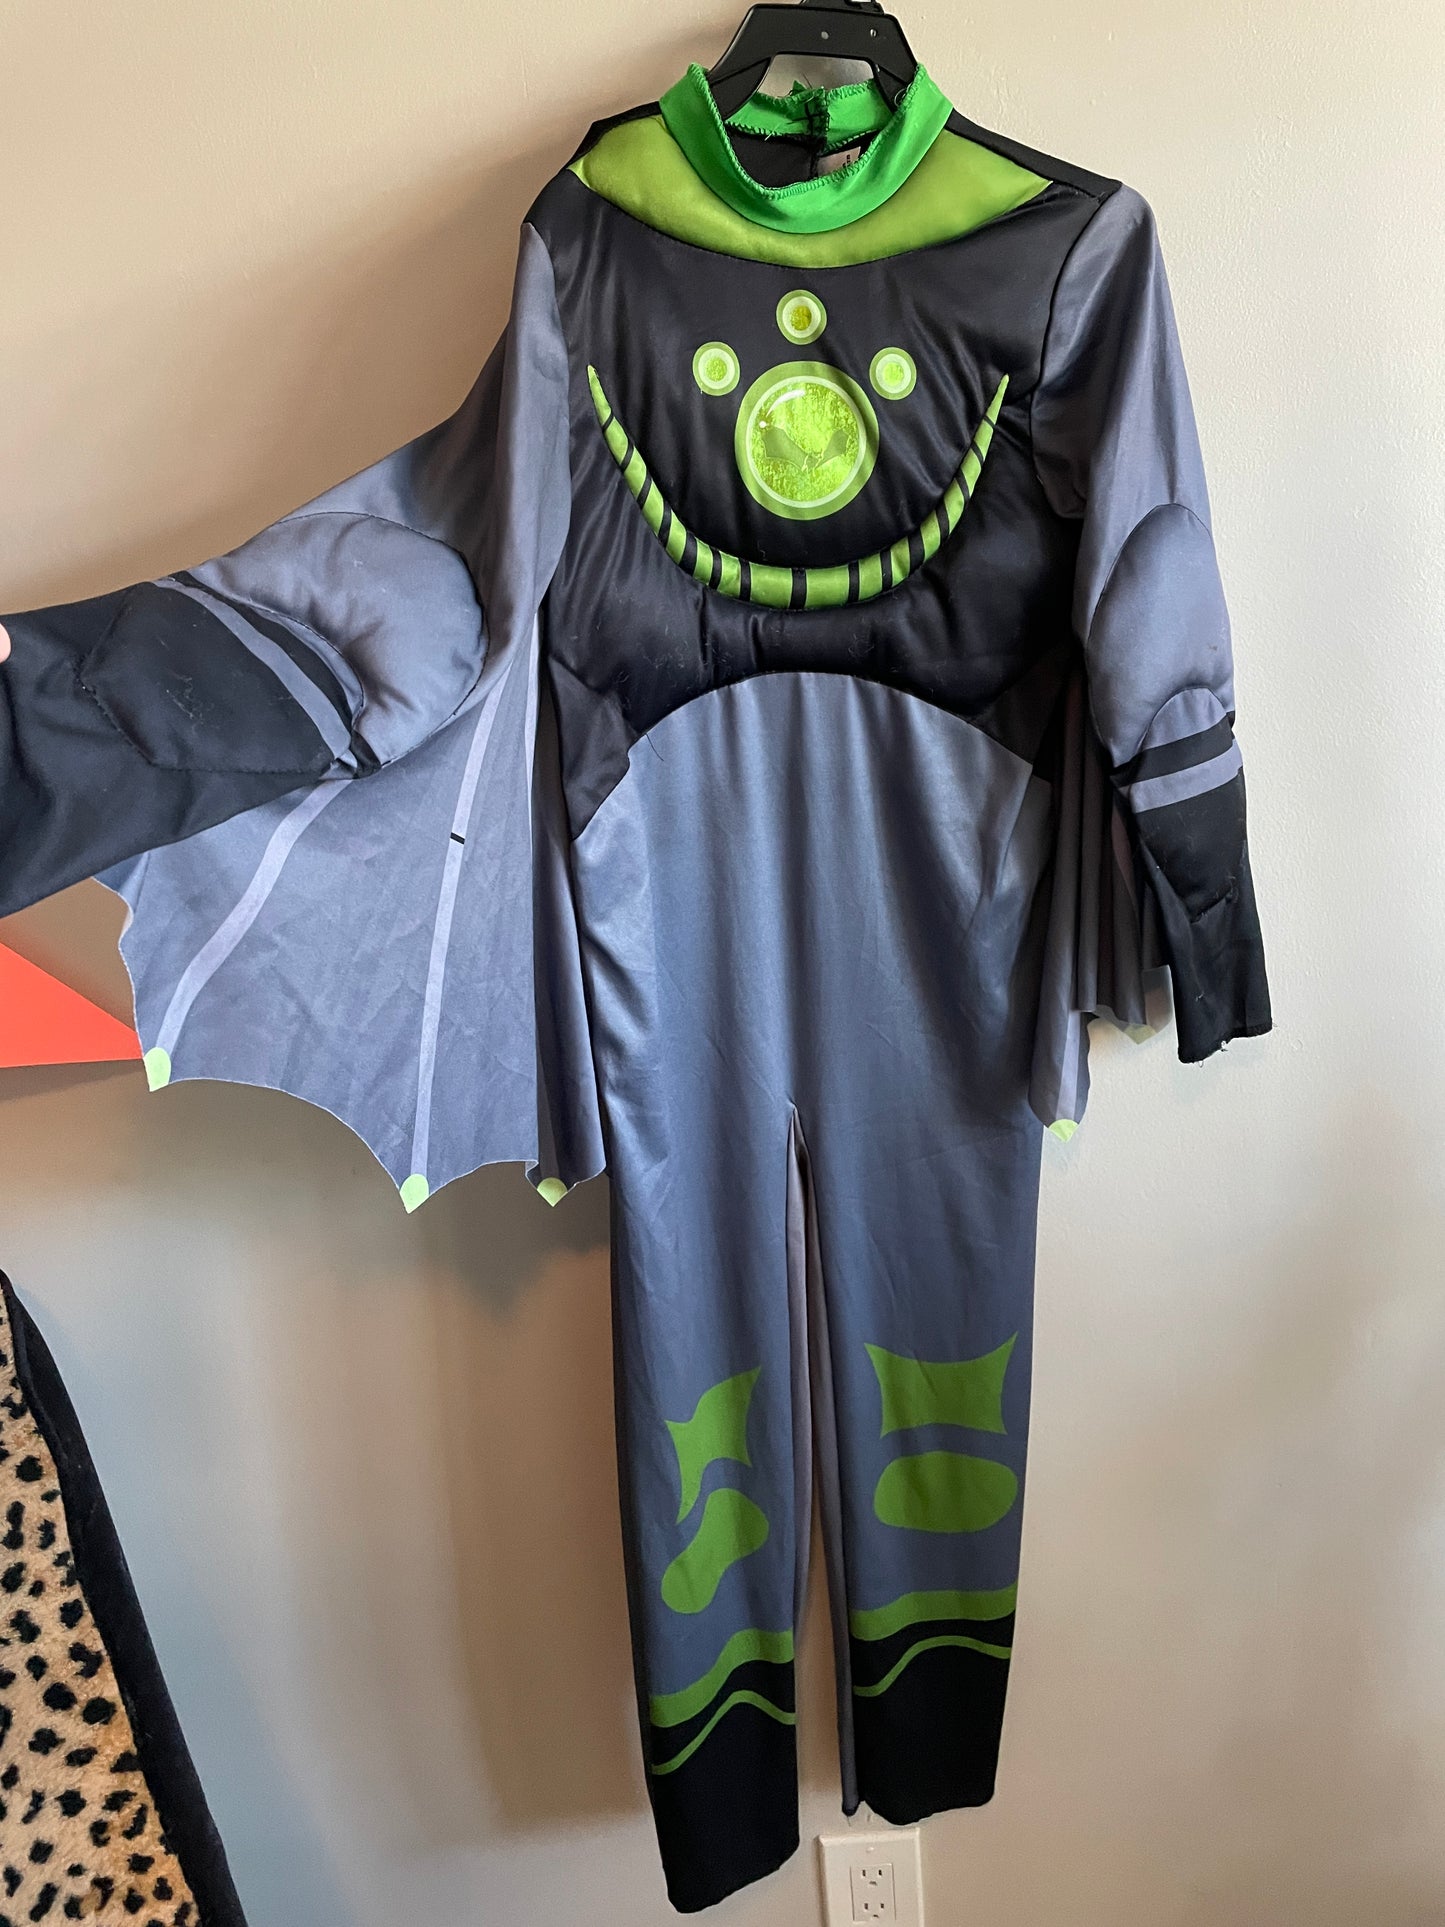 Wild Kratts "Chris Kratt" Costume